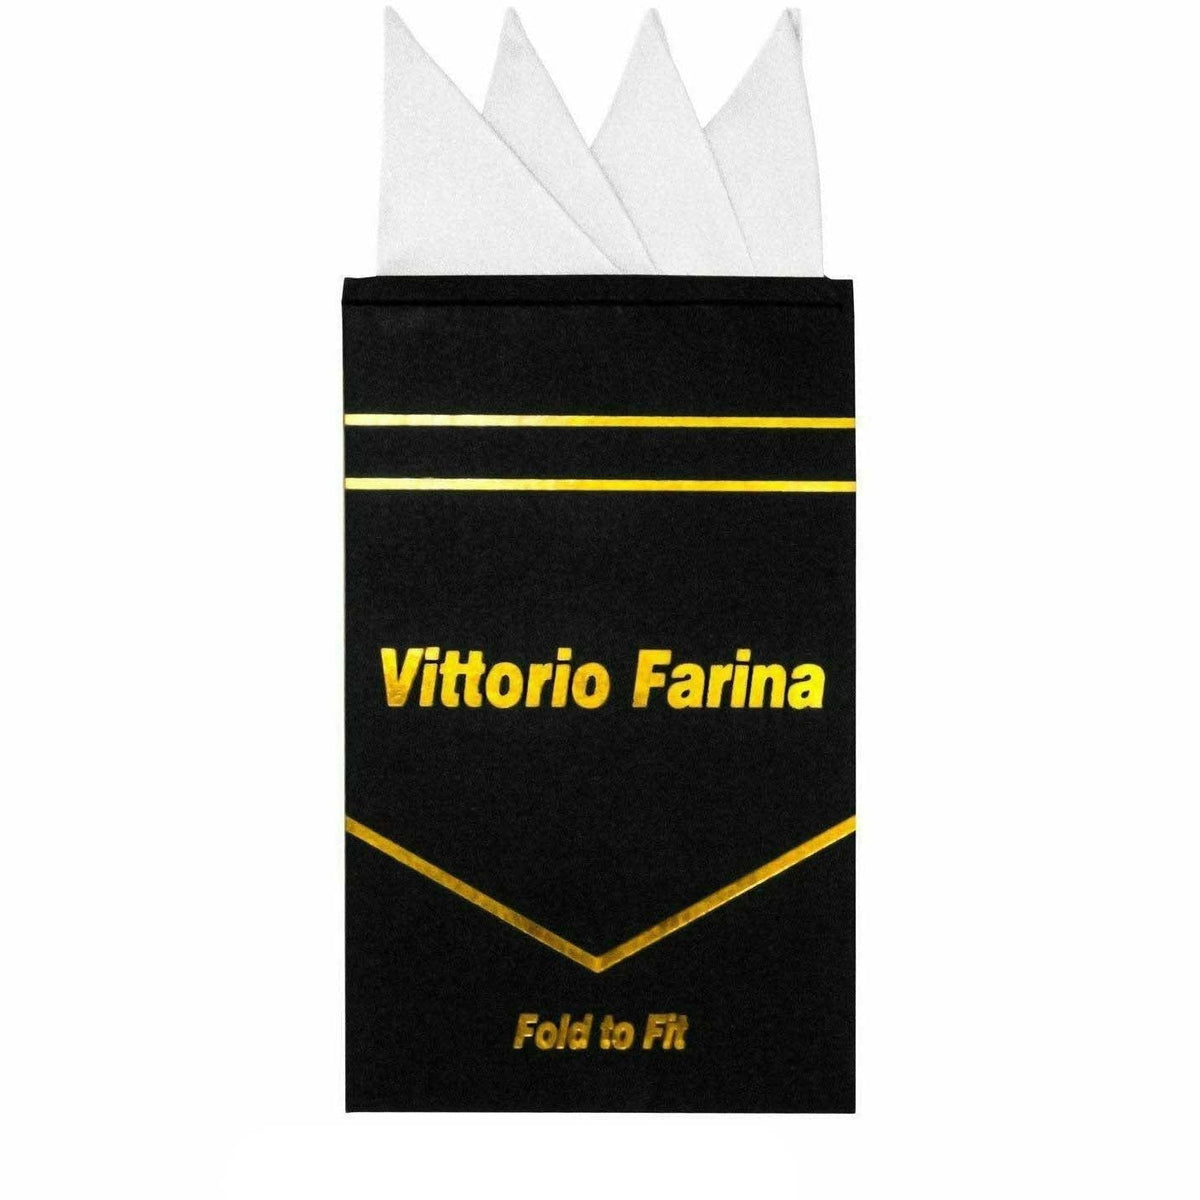 Vittorio Farina Pre-Folded Pocket Square (Four-Point)